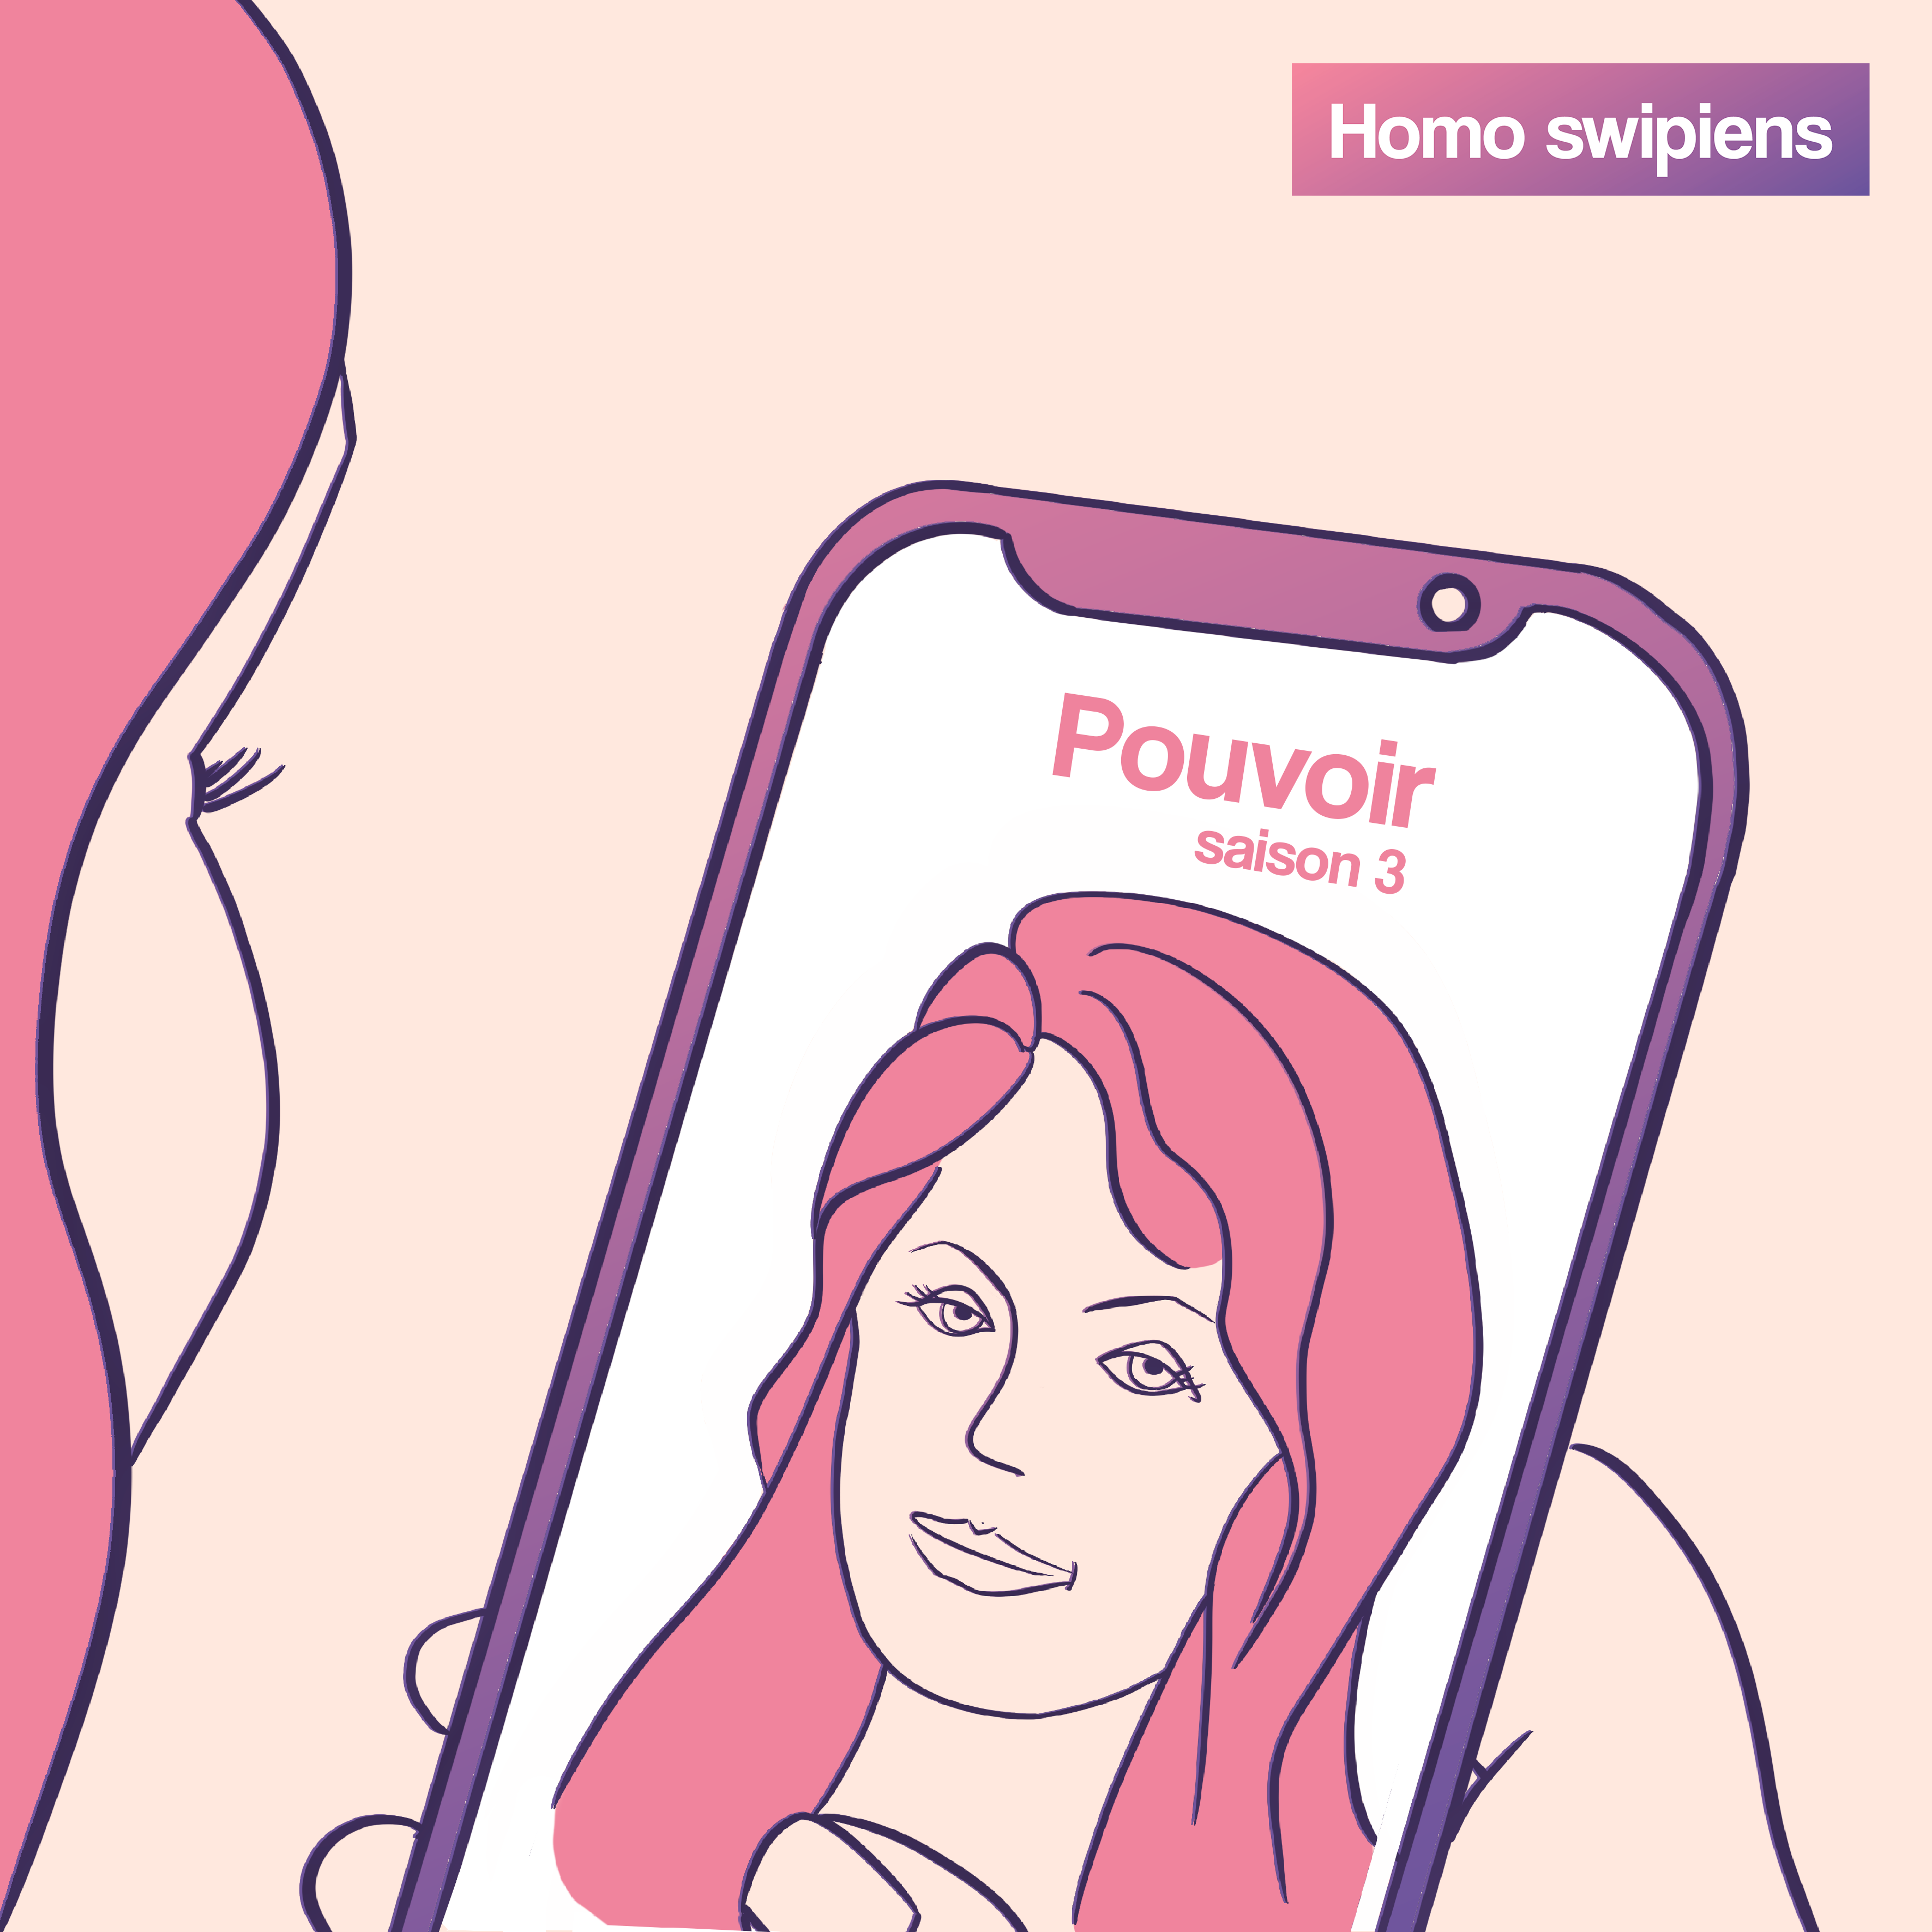 Pouvoir - Saison 3 - Homo swipiens